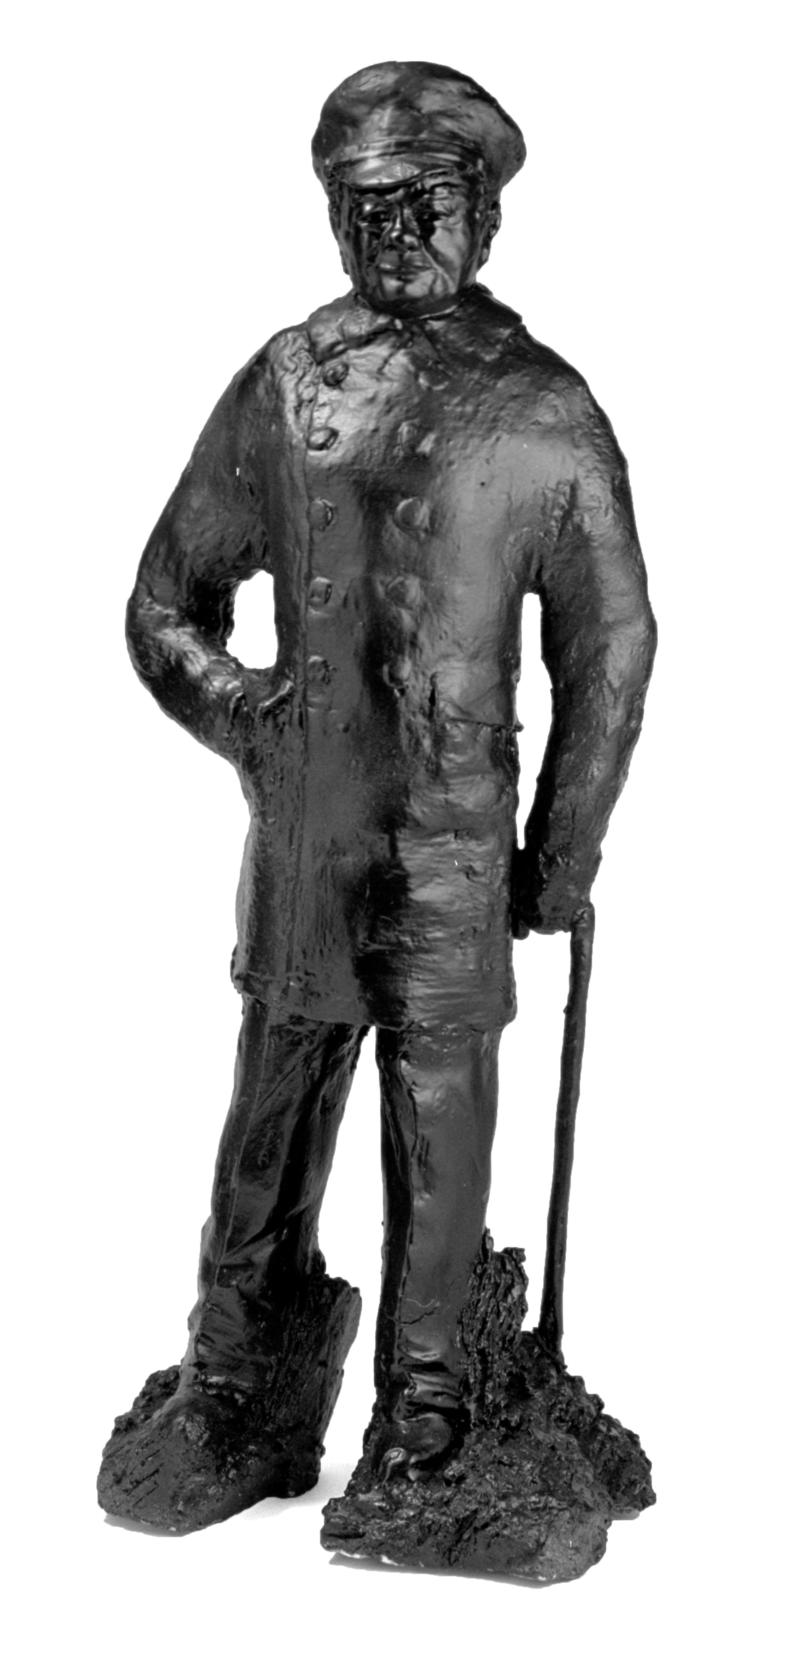 Sculpture of Sir Winston Churchill by George Brinley Evans